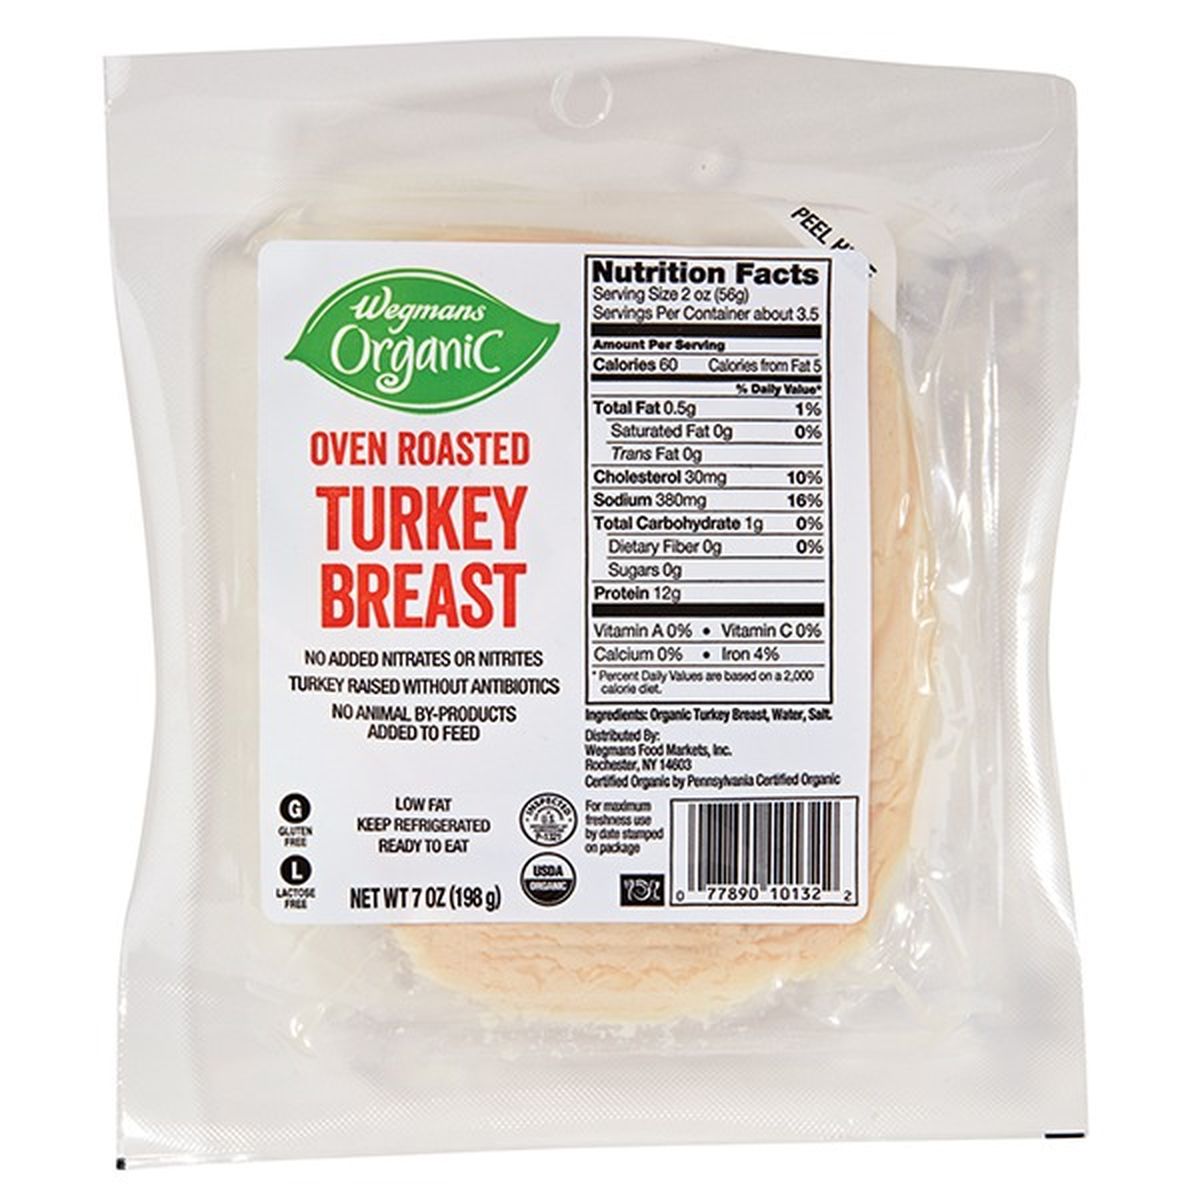 Calories in Wegmans Organic Oven-Roasted Turkey Breast, Sliced